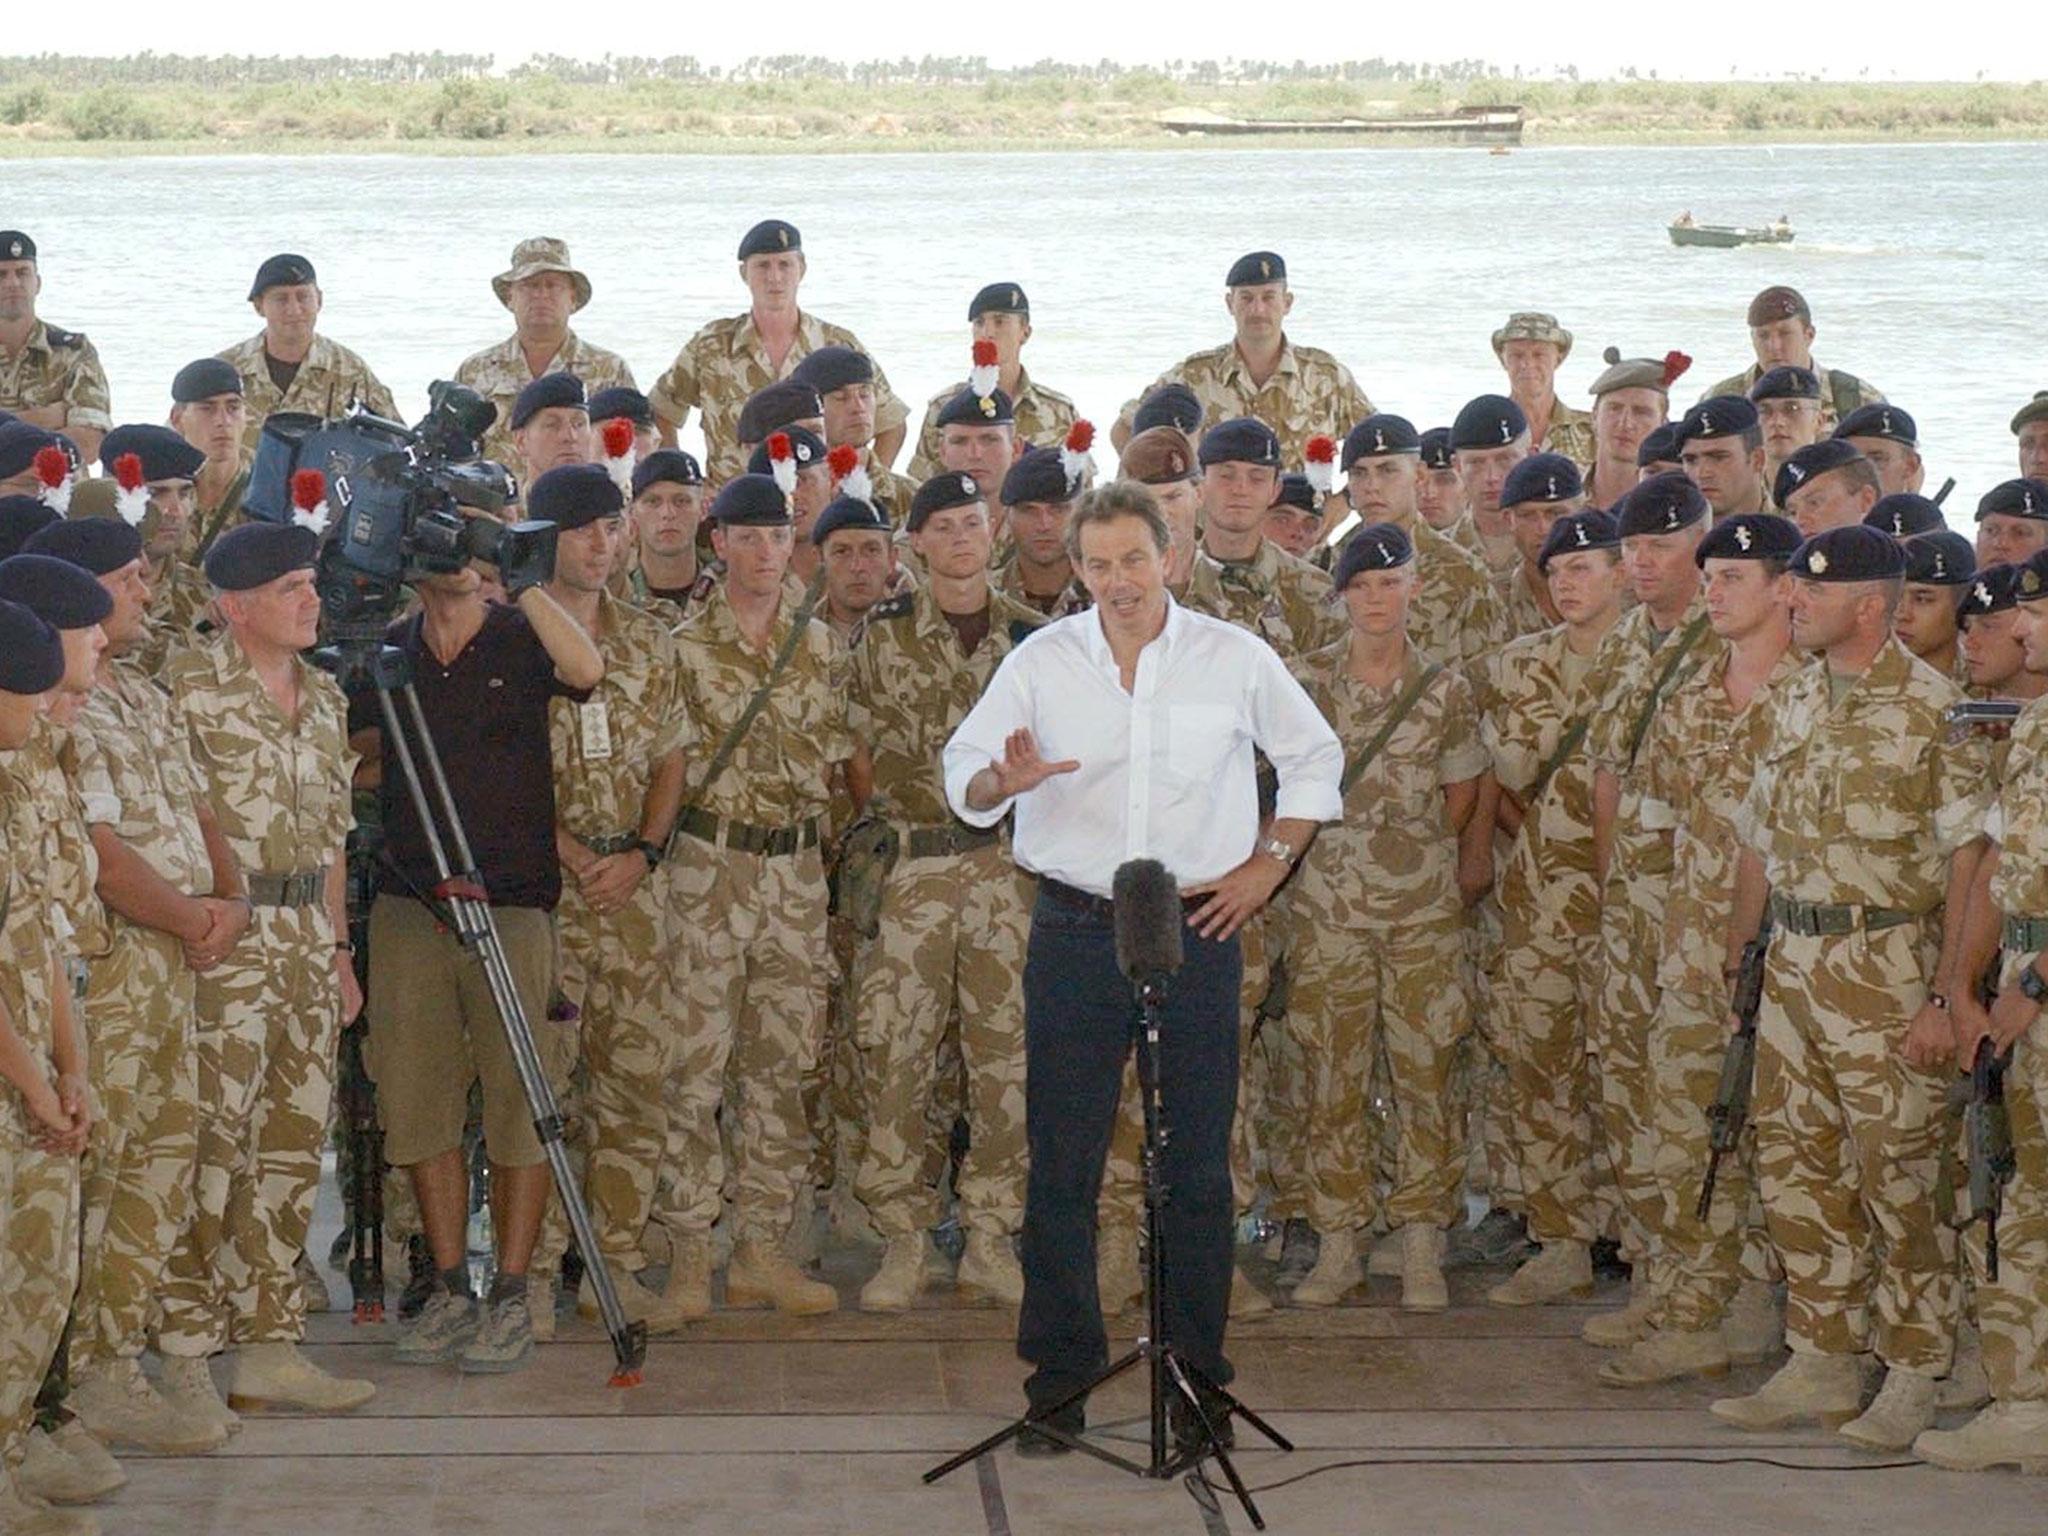 May 2003: Tony Blair addressing British troops in Basra